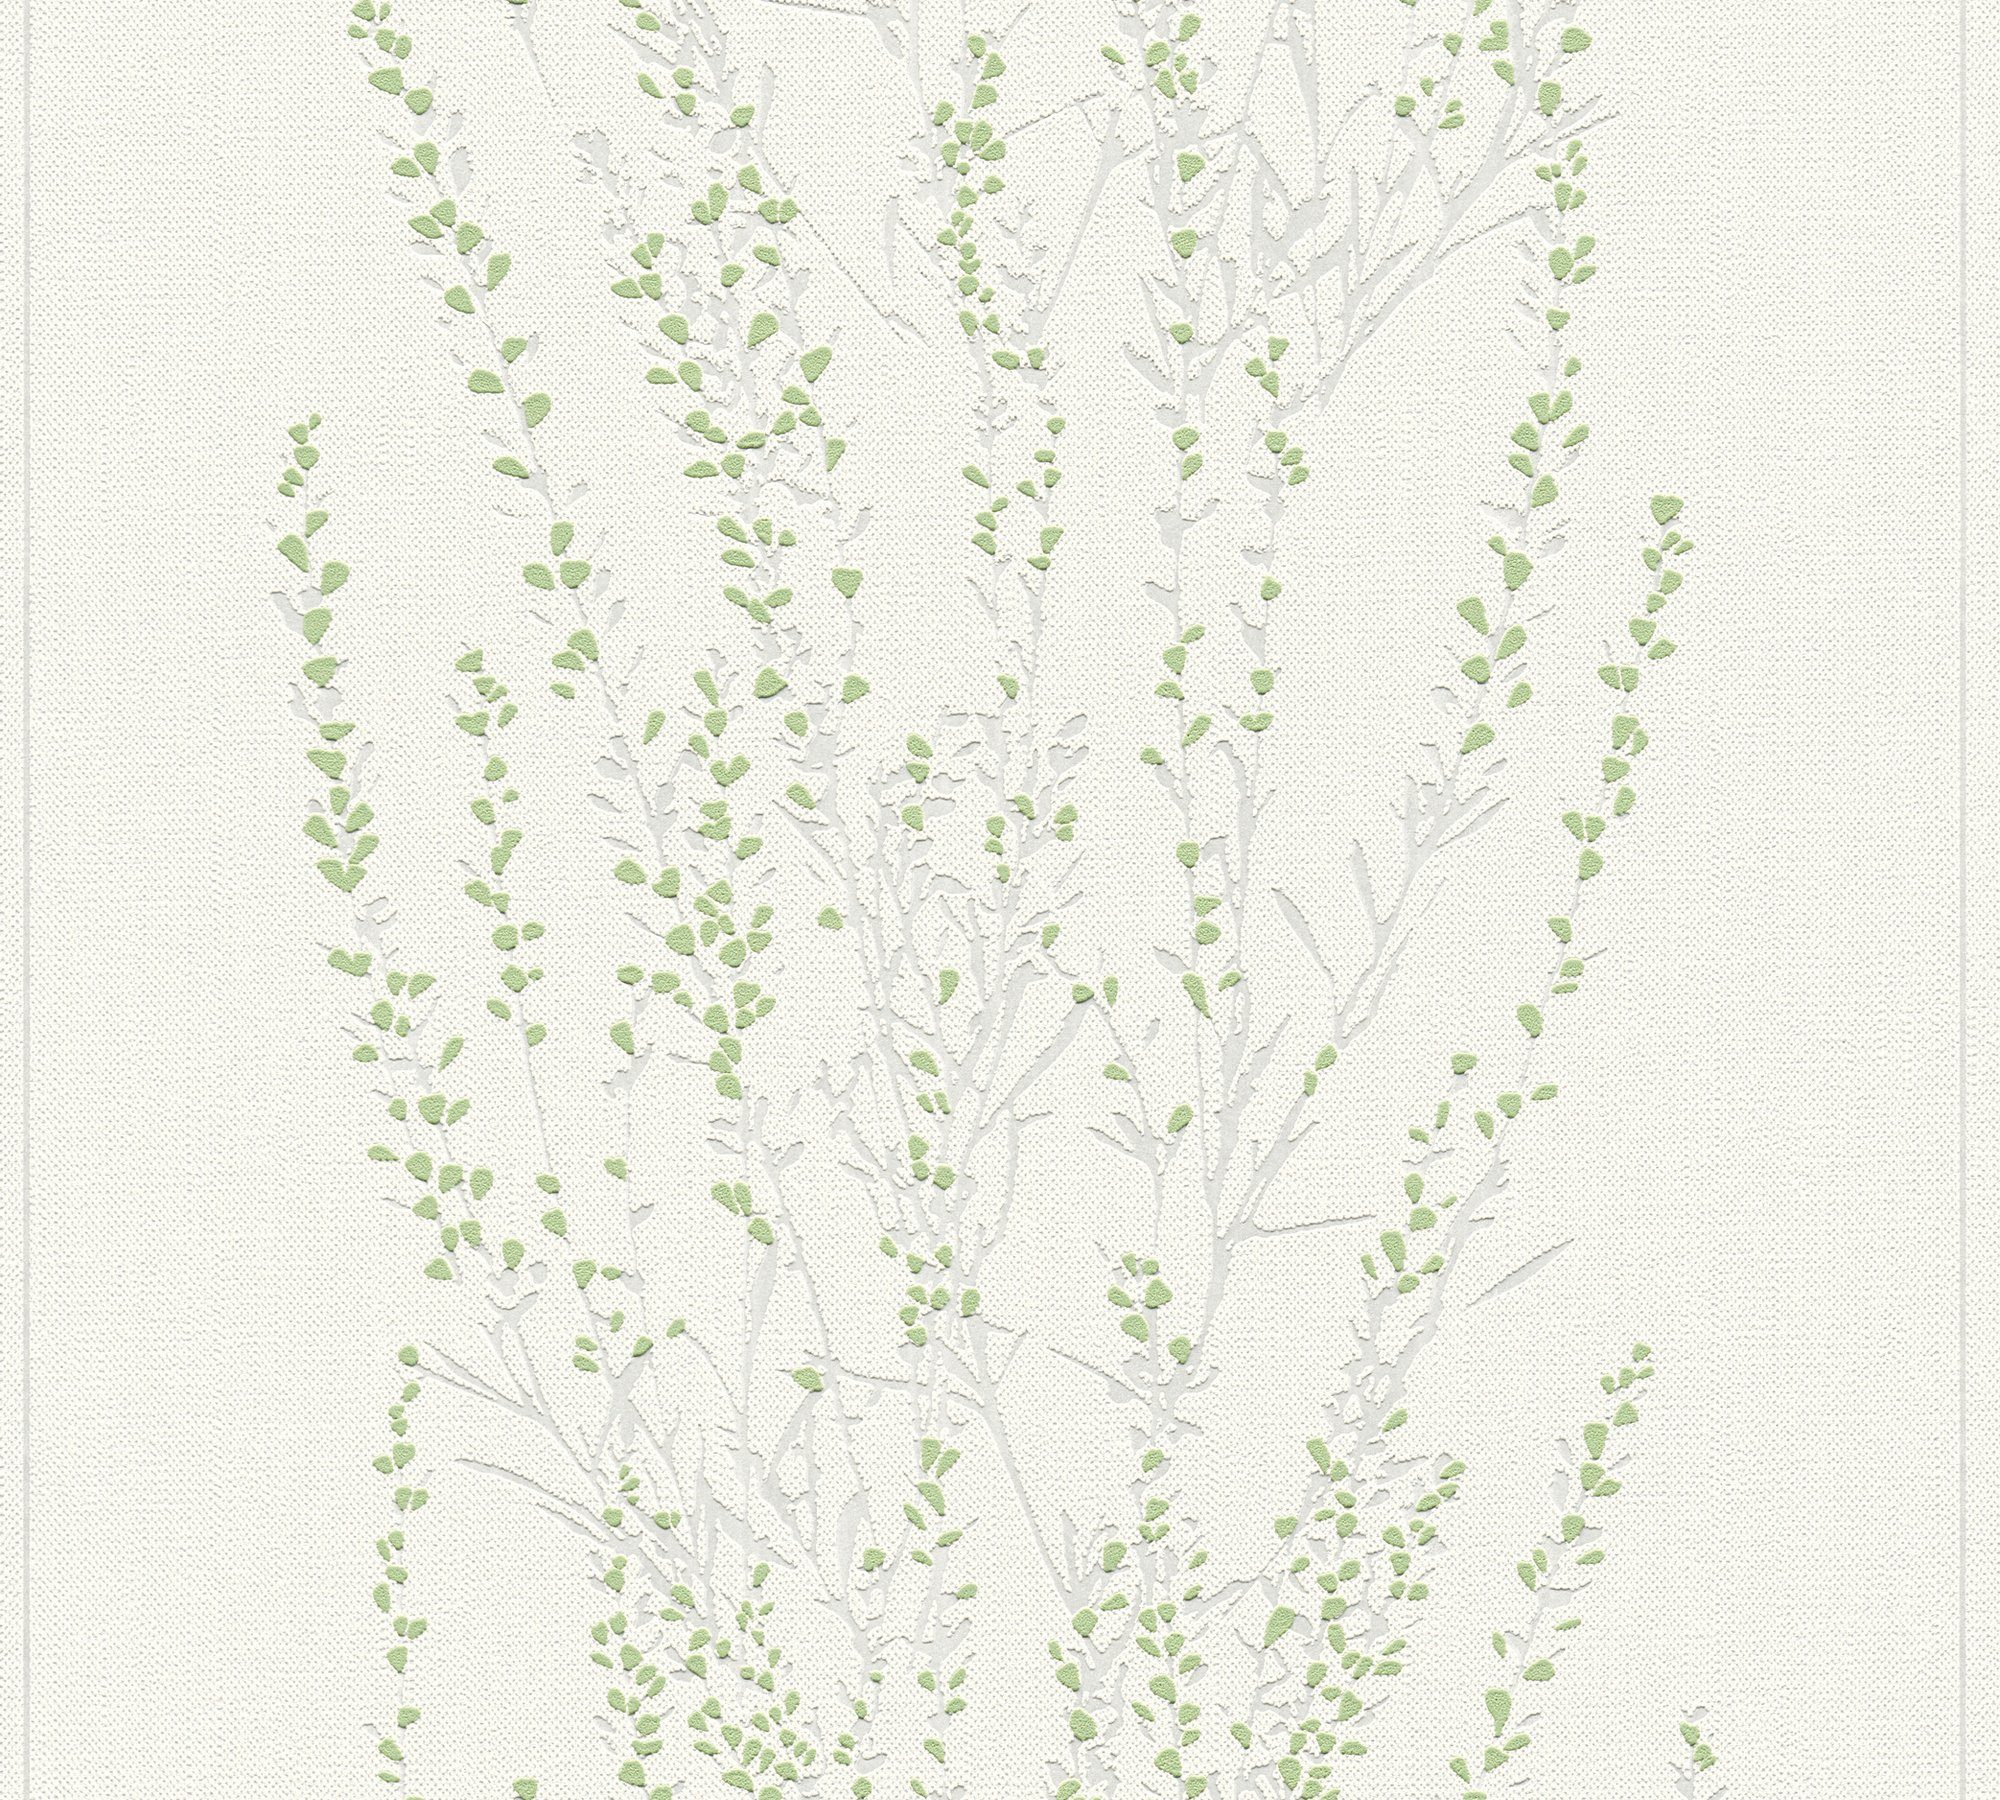 Tapete Blooming grau/grün A.S. Vliestapete floral, Création strukturiert, Blumen floral,